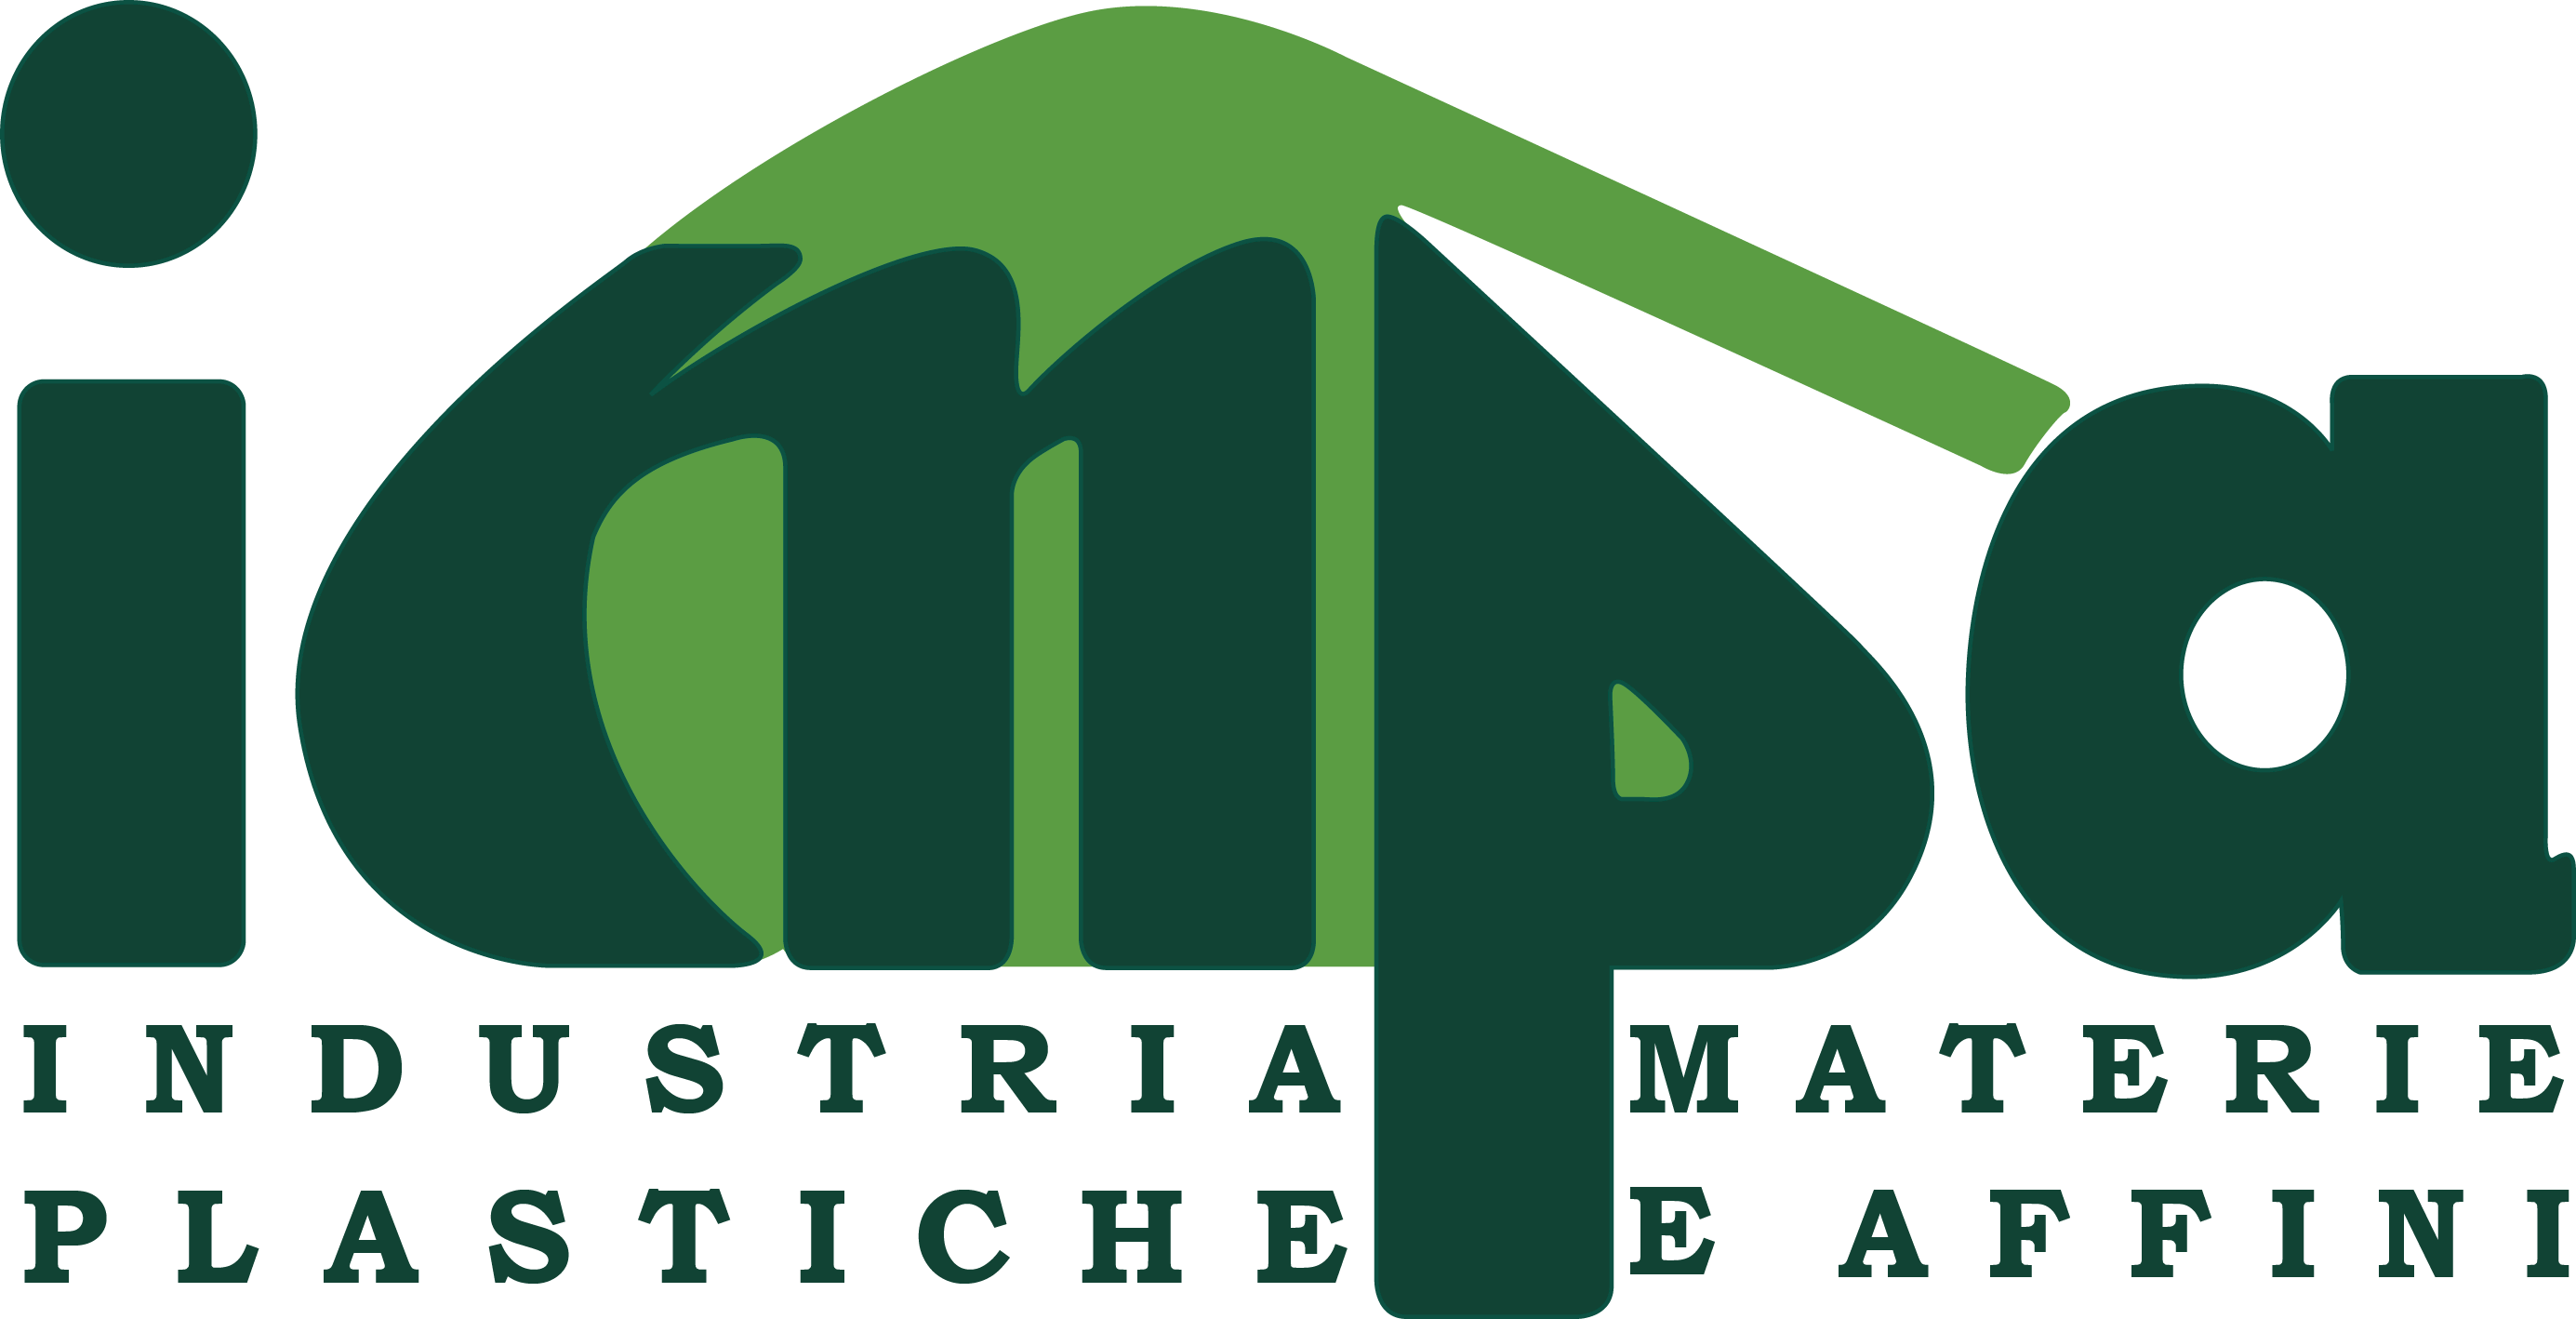 Impa logo